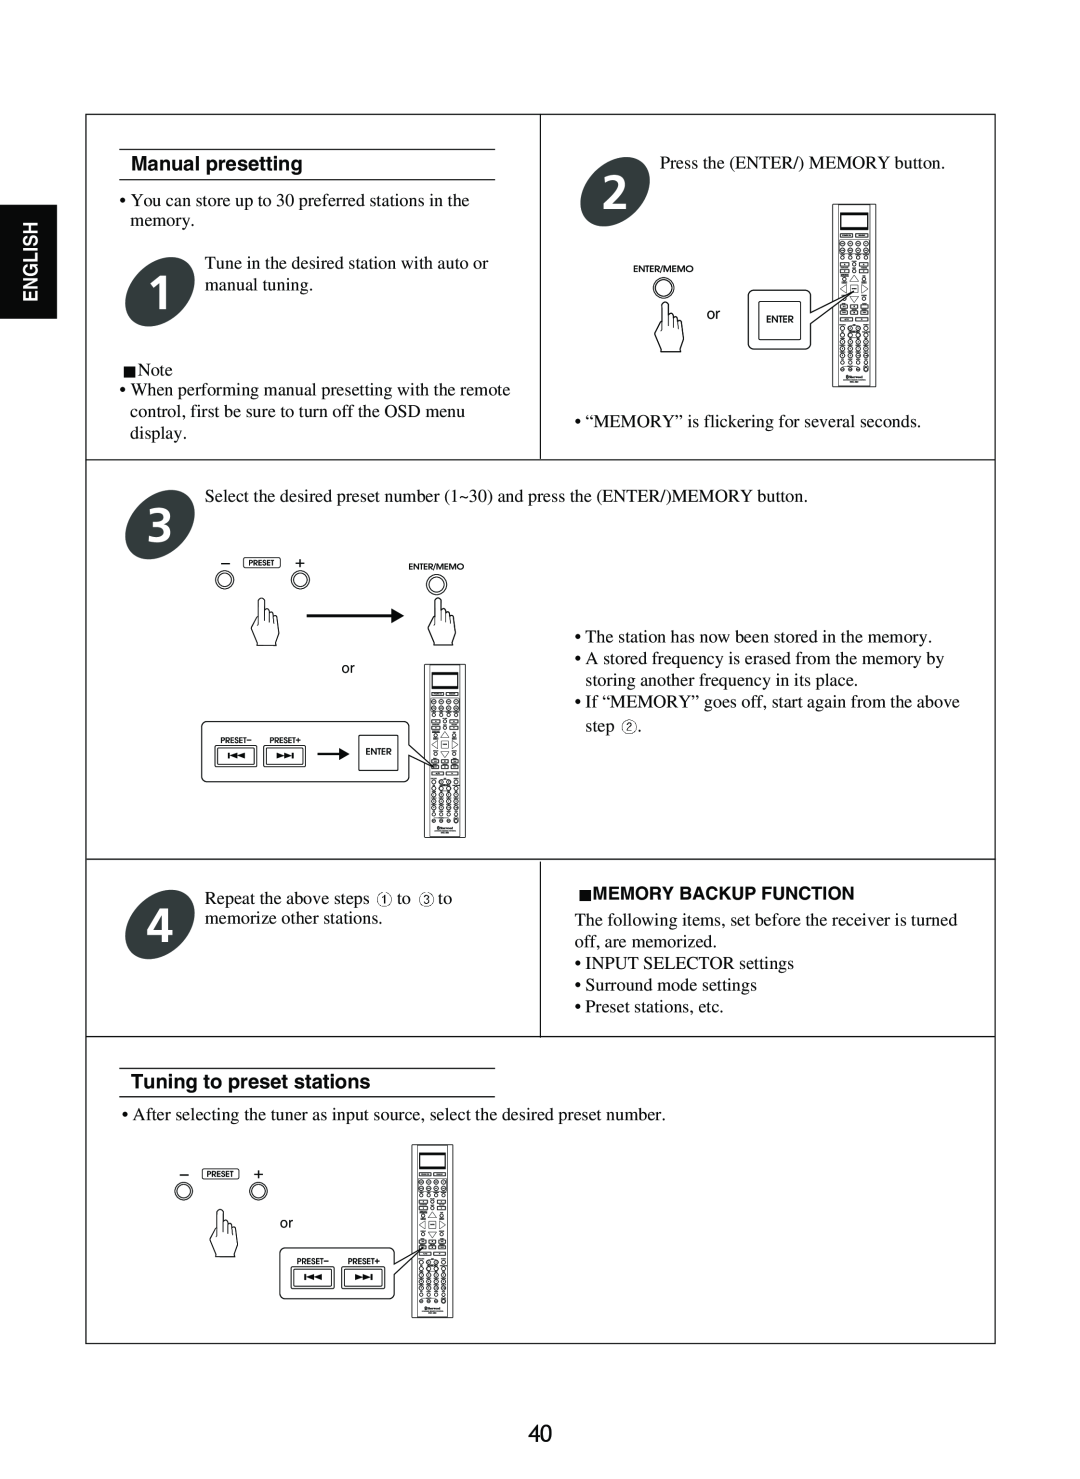 Sherwood R-865 manual Manual presetting, Tuning to preset stations, Memory Backup Function, English 